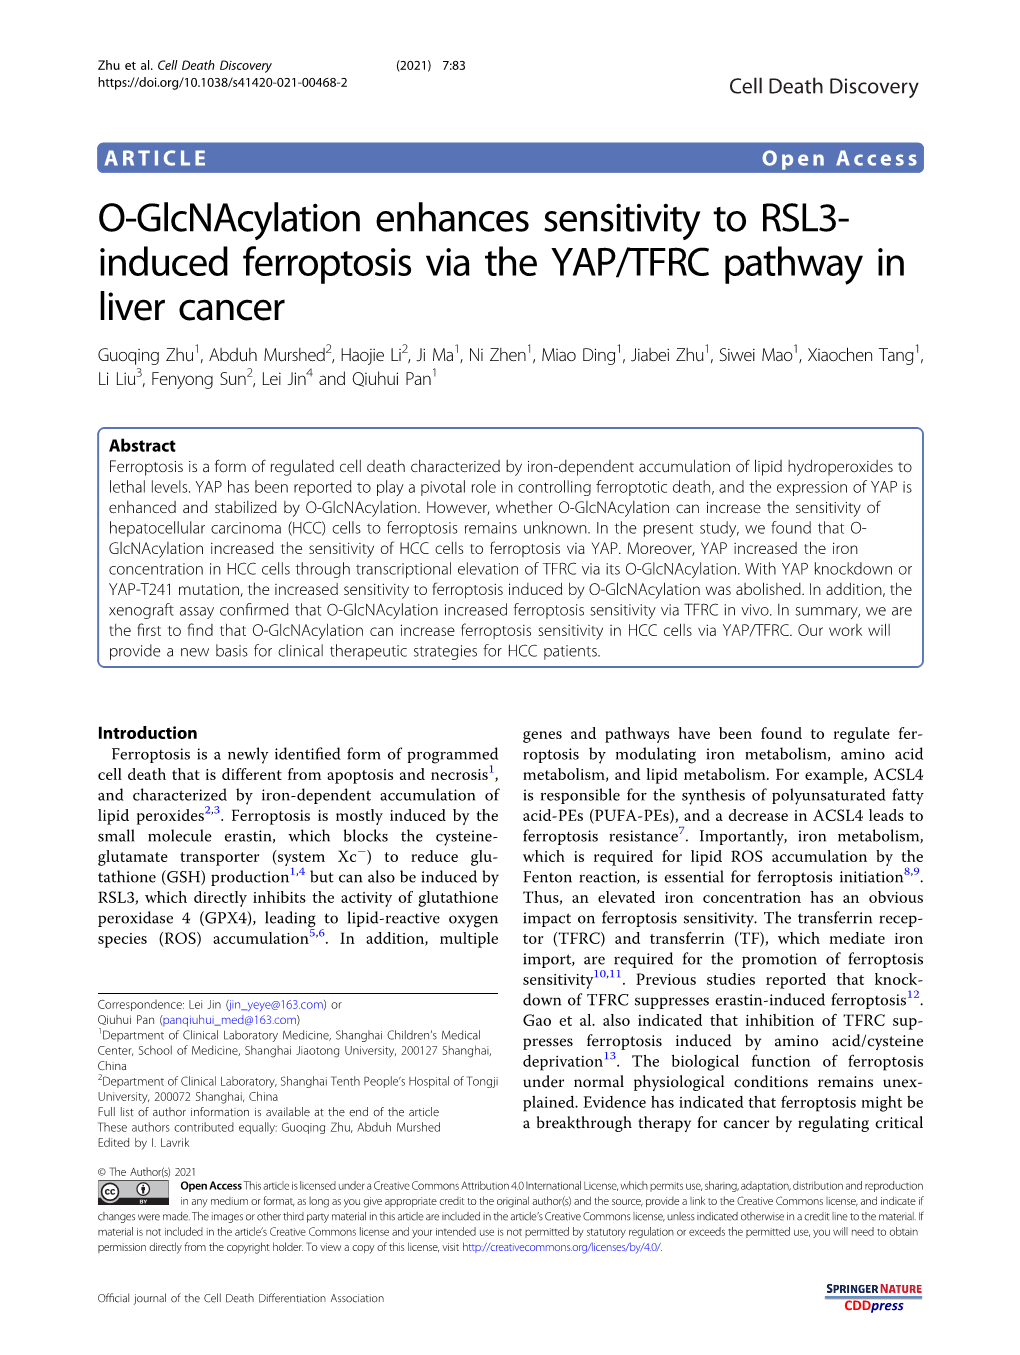 O-Glcnacylation Enhances Sensitivity to RSL3-Induced Ferroptosis Via the YAP/TFRC Pathway in Liver Cancer